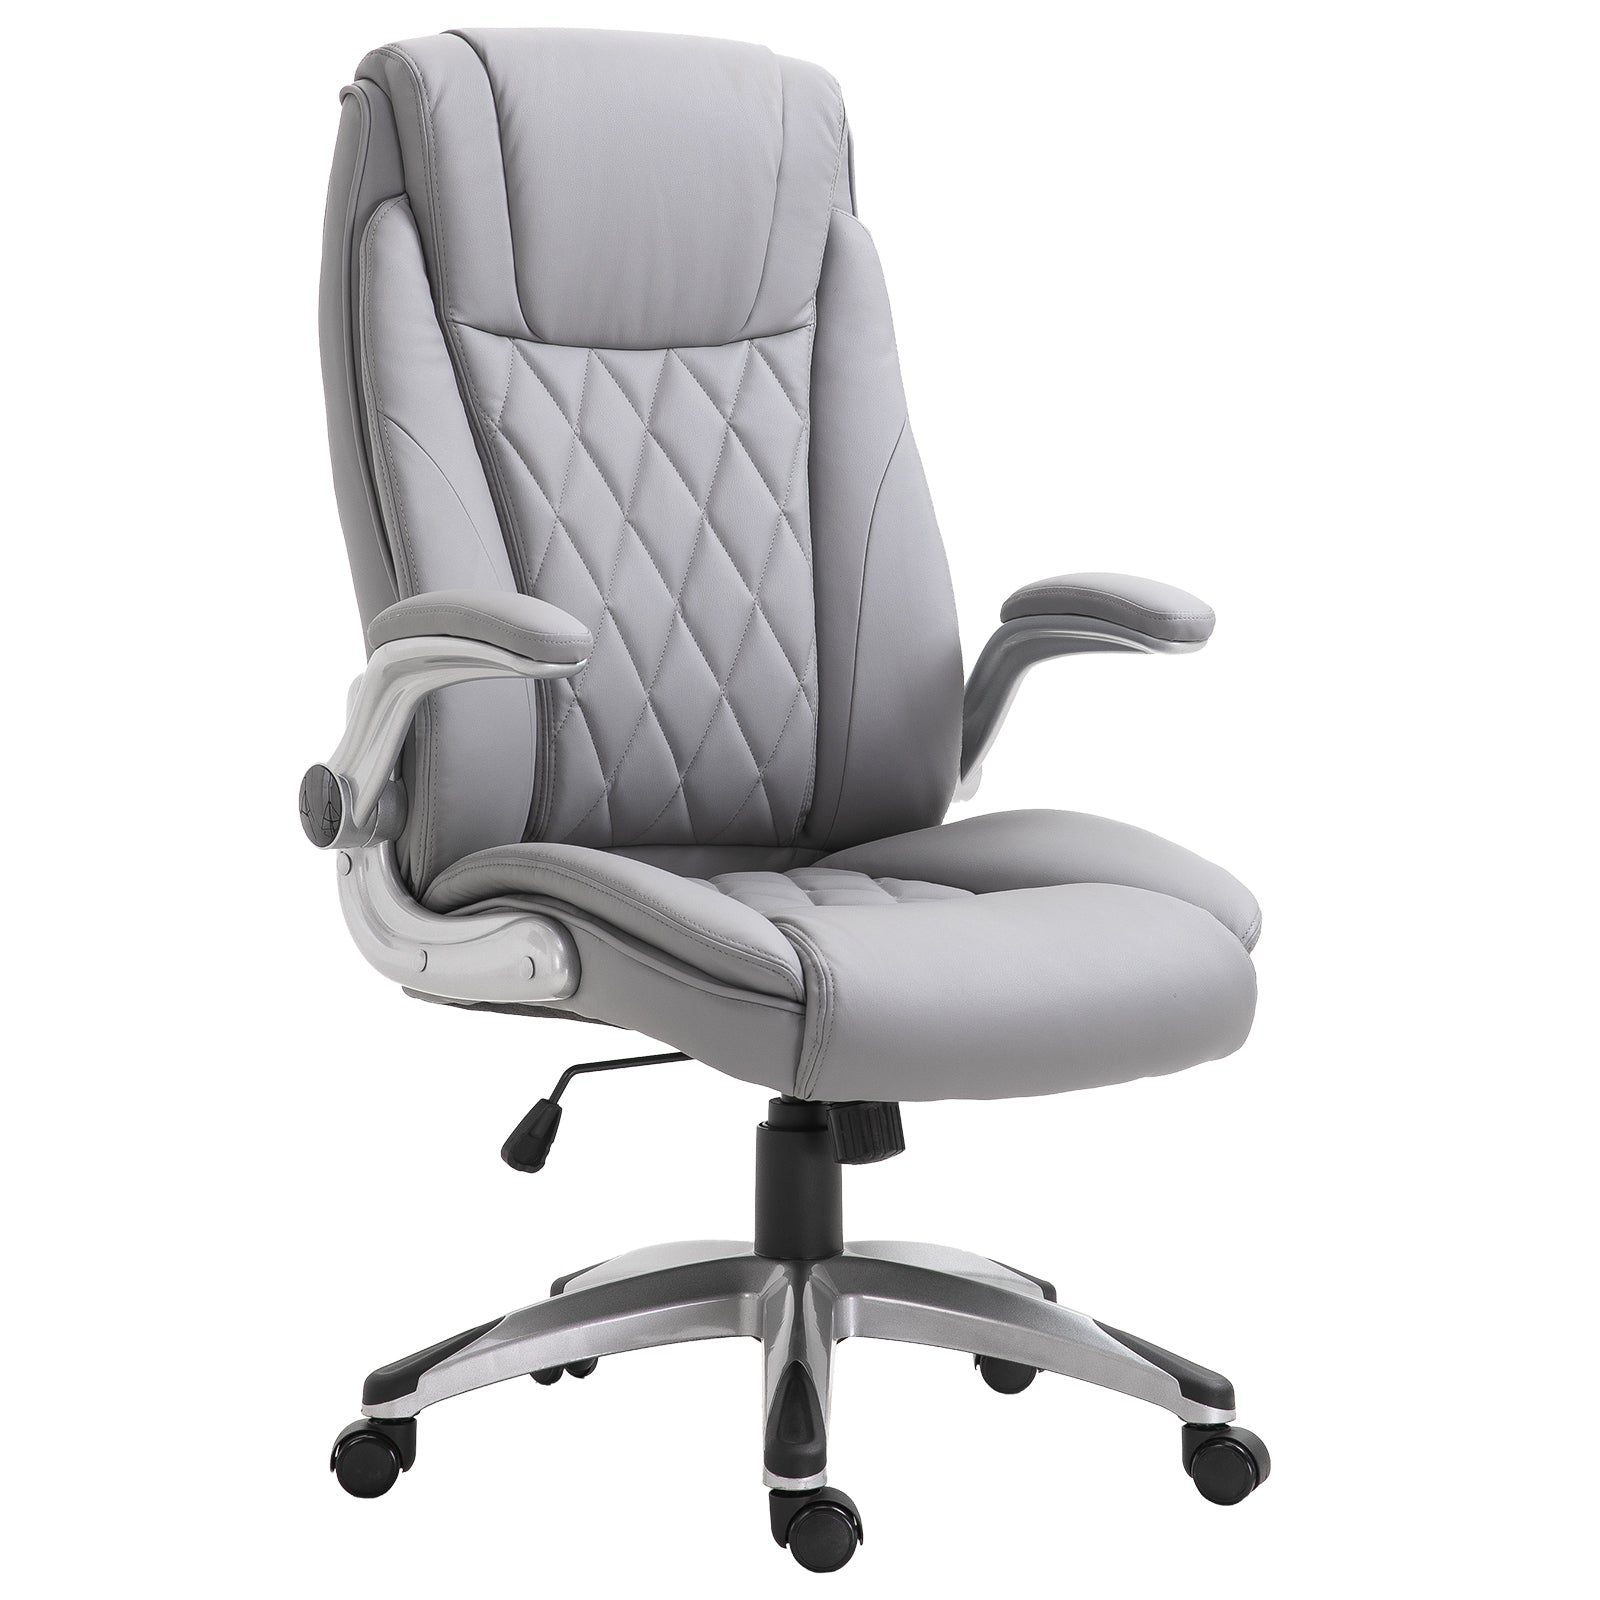 ProperAV PU Leather Ergonomic Swivel Office Chair with Headrest (Grey)